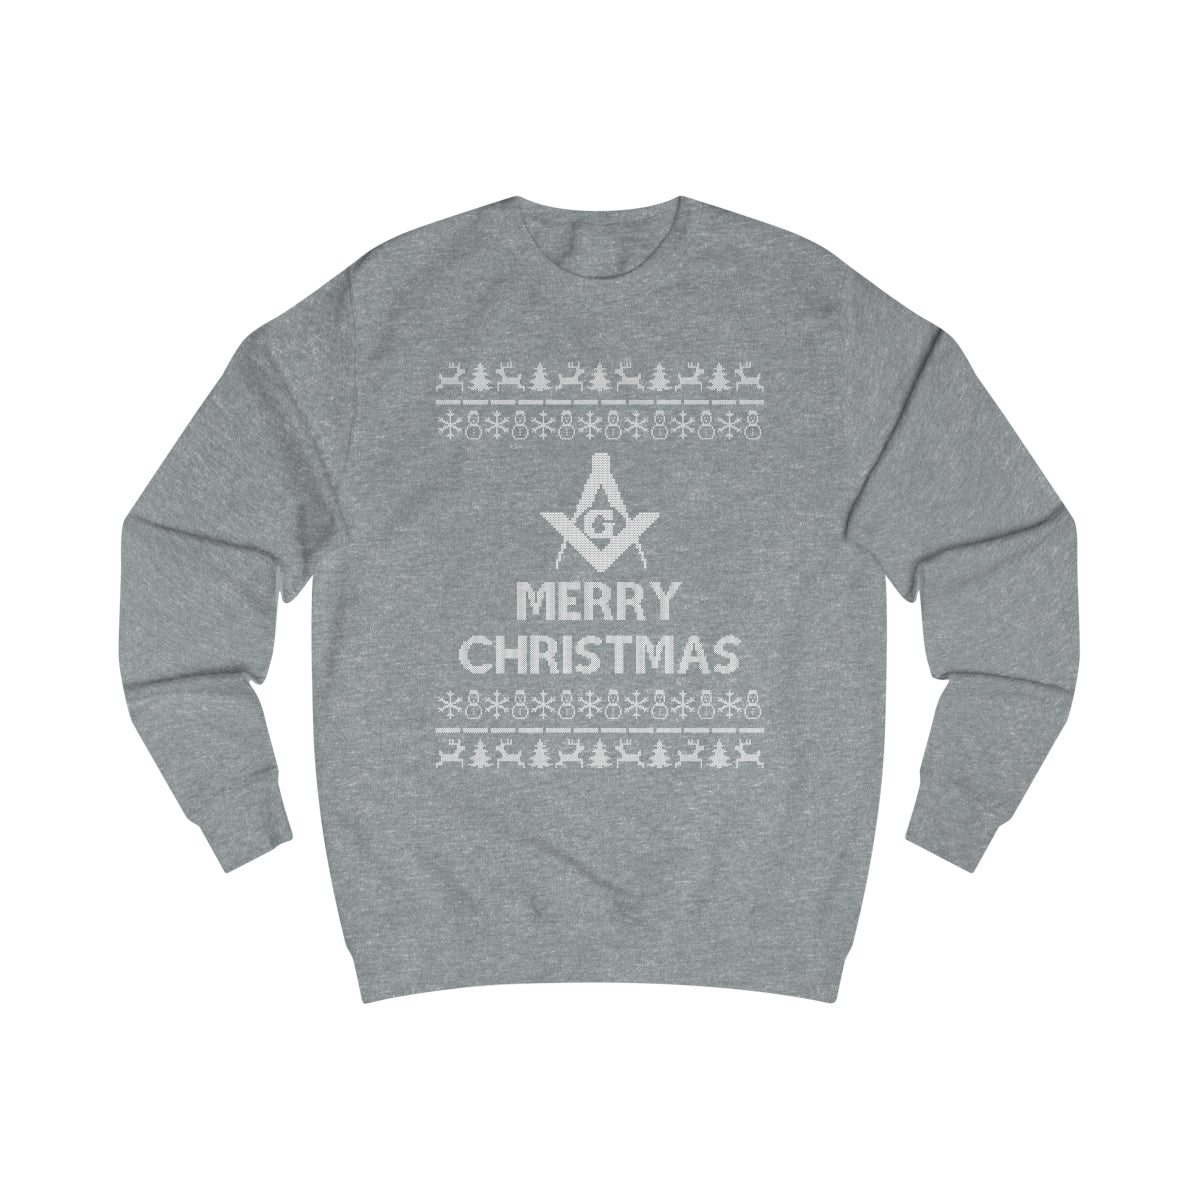 Master Mason Blue Lodge Sweatshirt - Ugly Merry Christmas Sweater - Bricks Masons